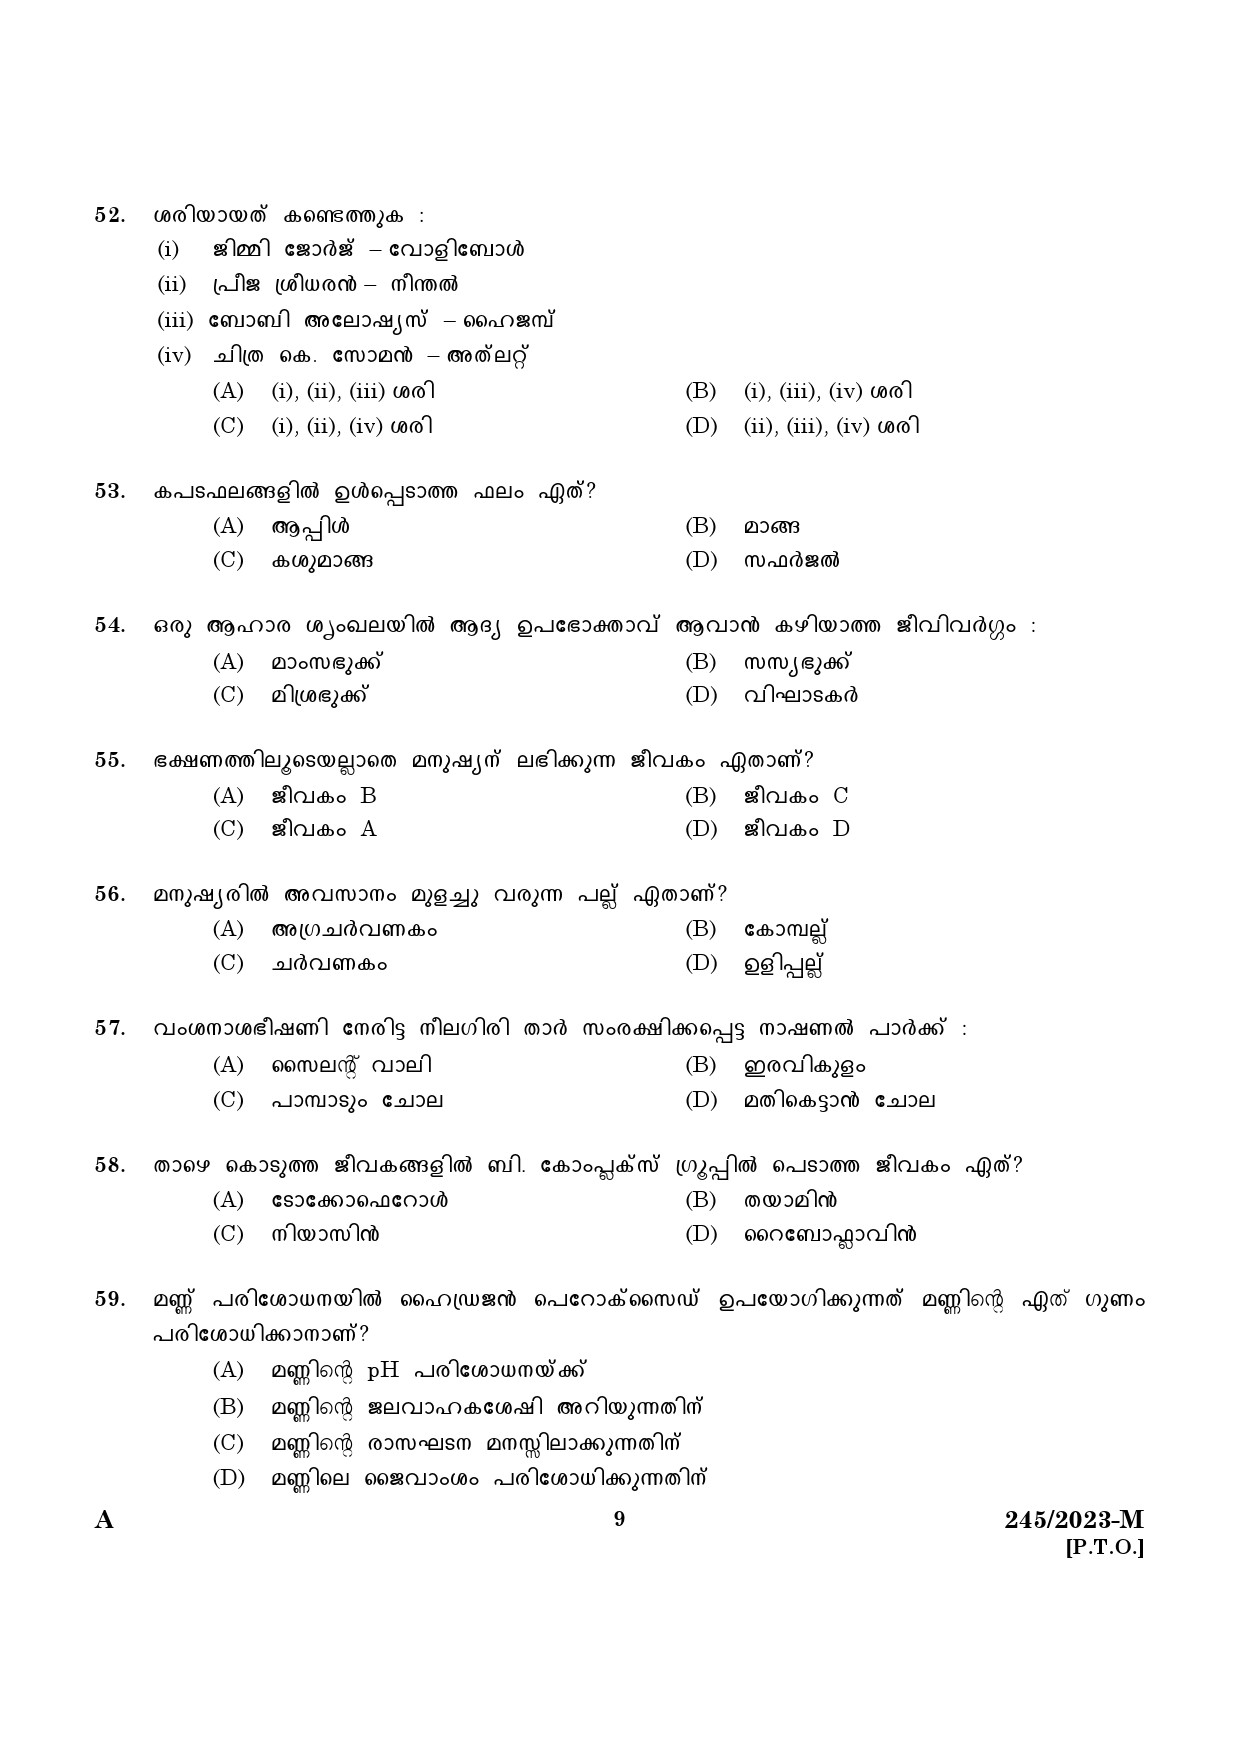 KPSC LGS Malayalam Exam 2023 Code 2452023 M 7